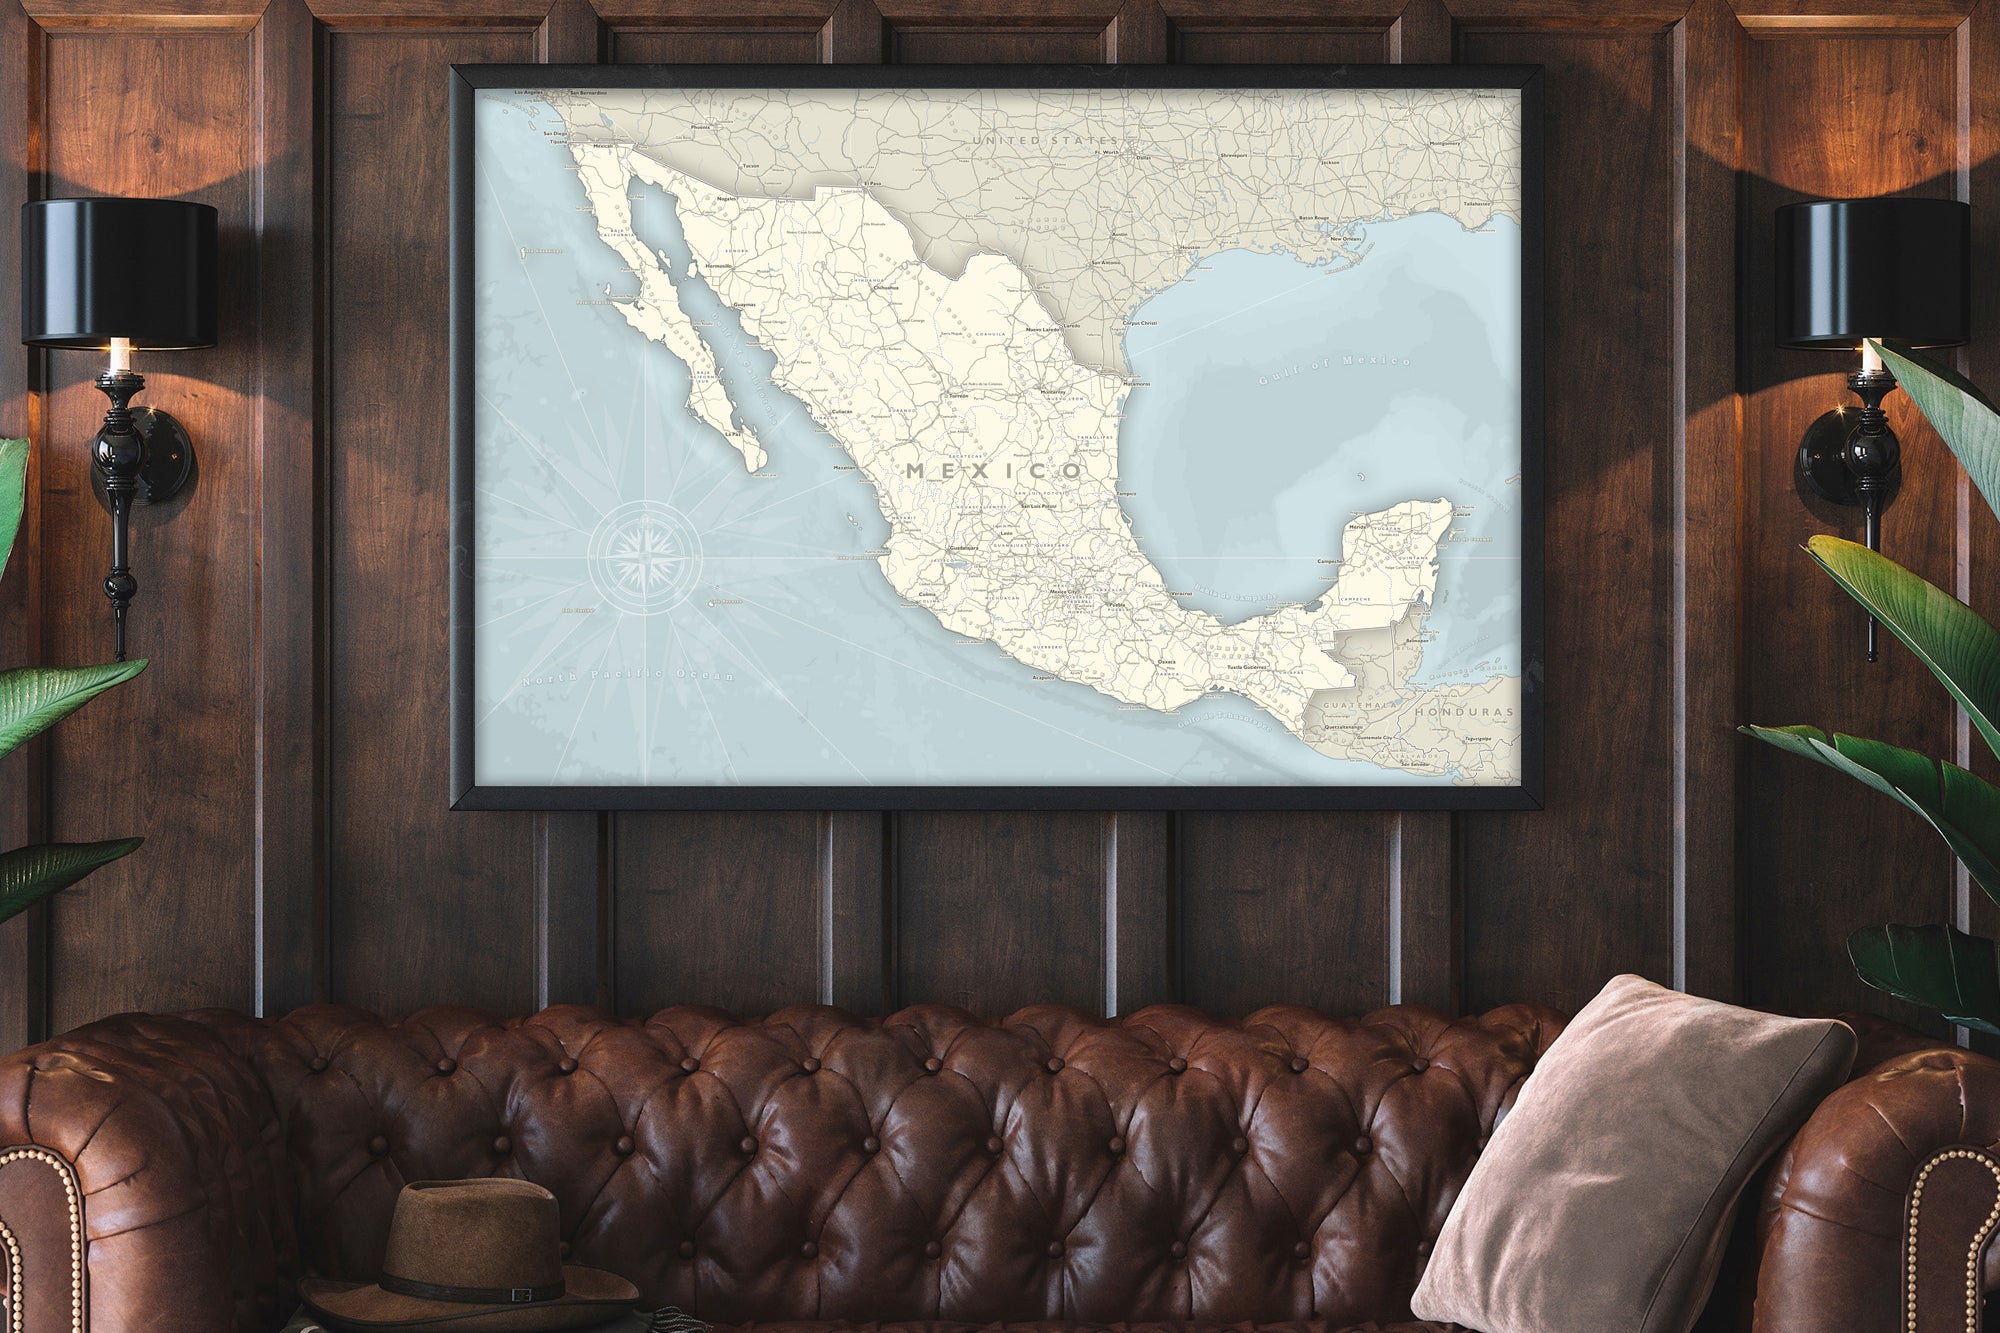 Mexico wall map framed